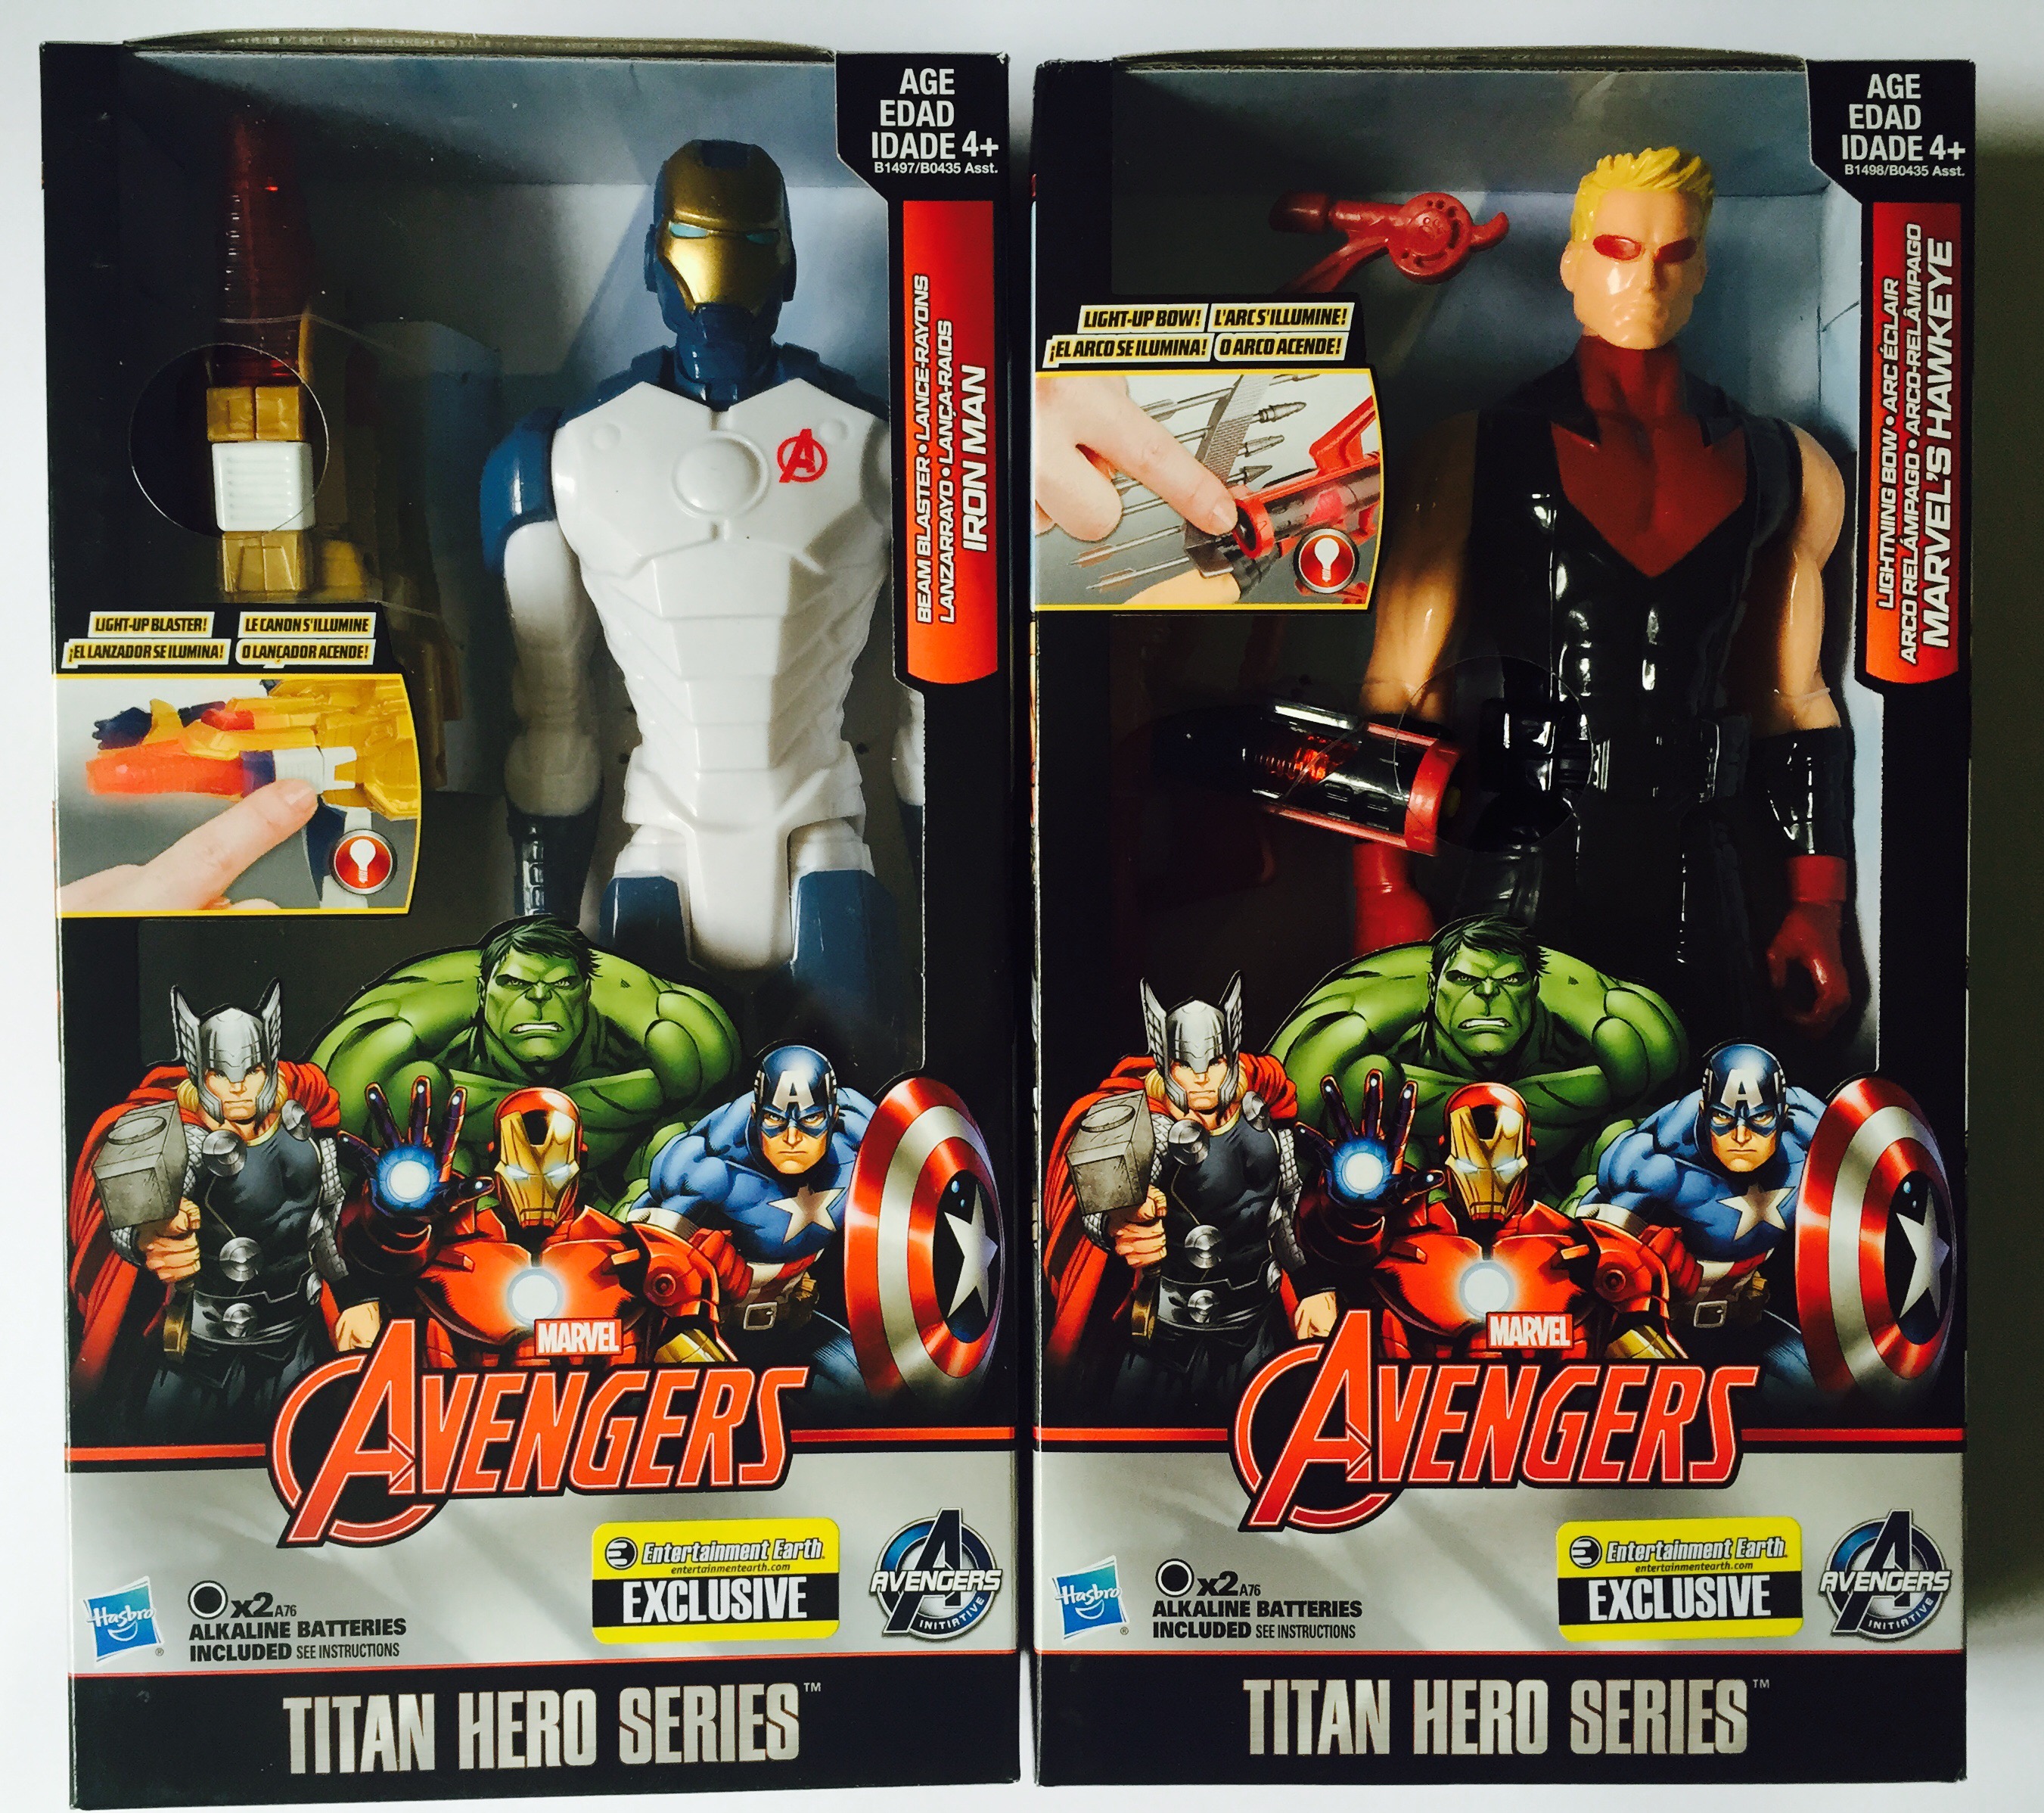 1/6 Hot Toys Marvel Avengers MMS299 Iron Man Iron Legion 12" Action Figure